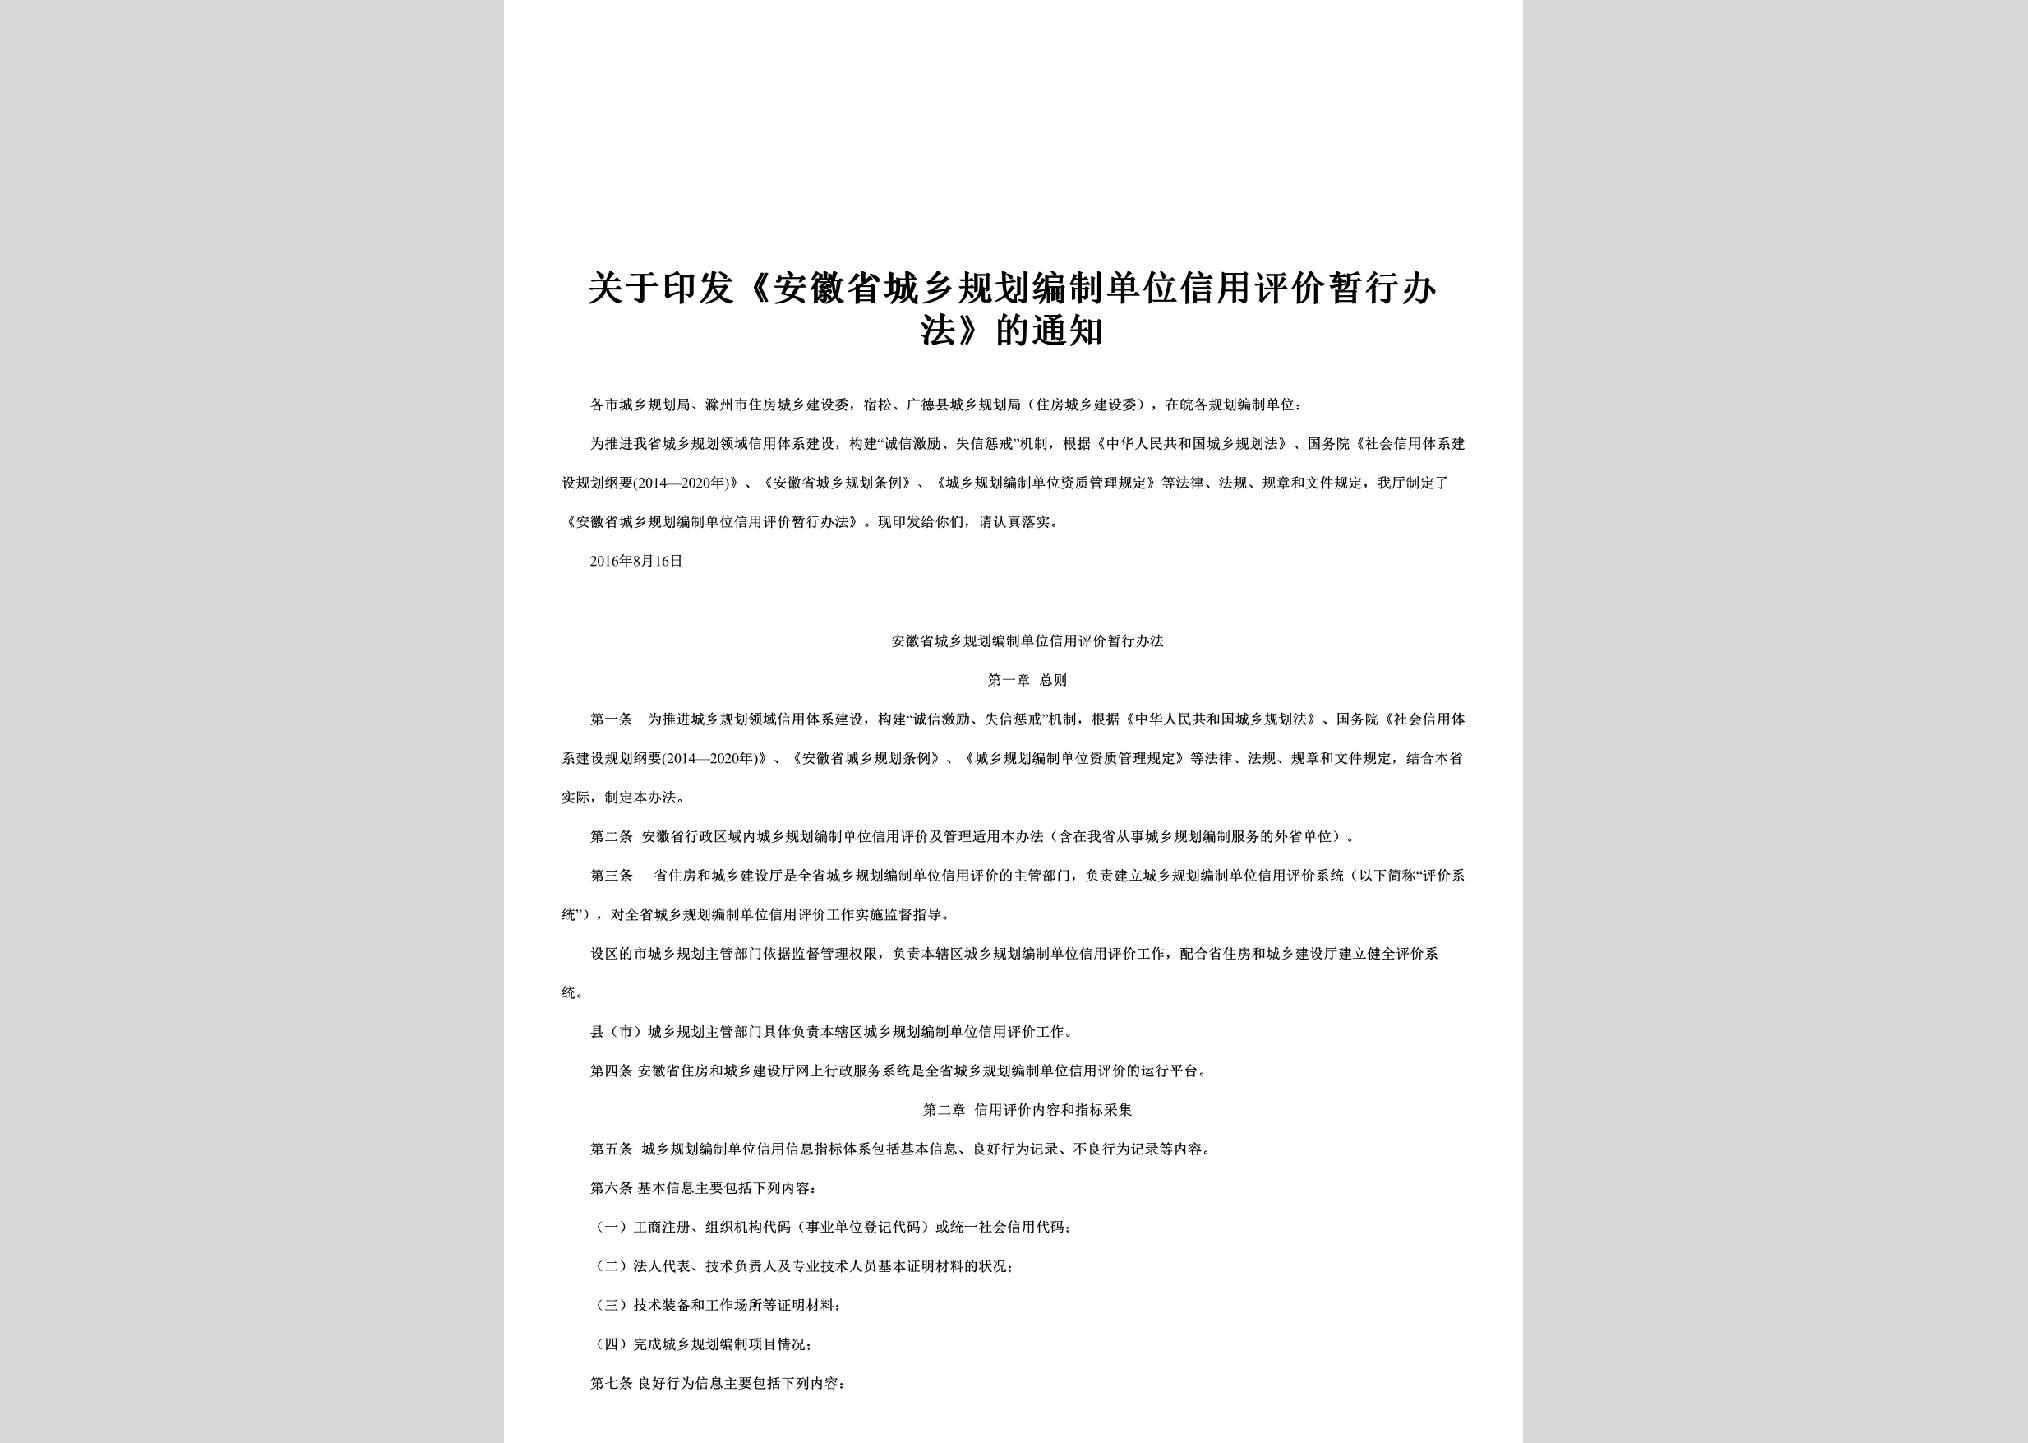 AH-CXGHPJTZ-2017：关于印发《安徽省城乡规划编制单位信用评价暂行办法》的通知